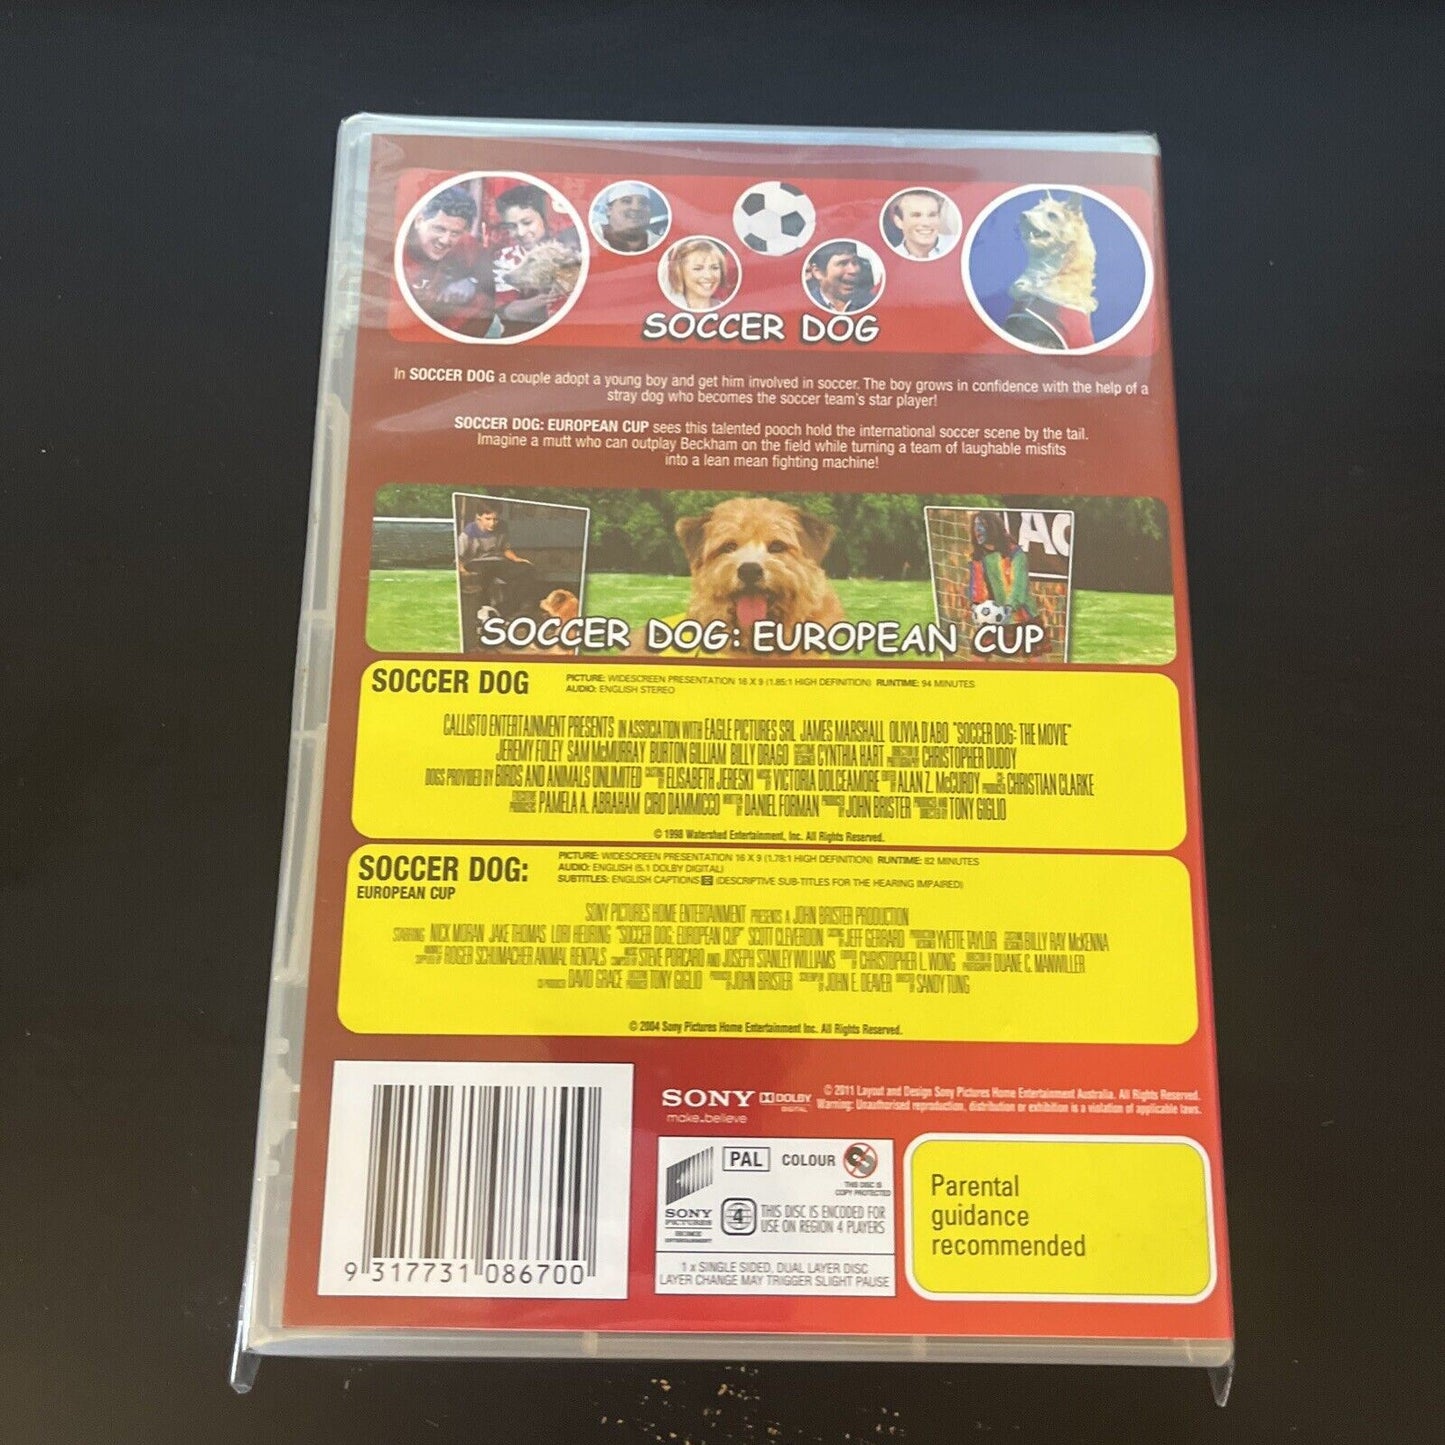 Soccer Dog - The Movie / Soccer Dog - European Cup (DVD, 2-Disc) NEW Region 4